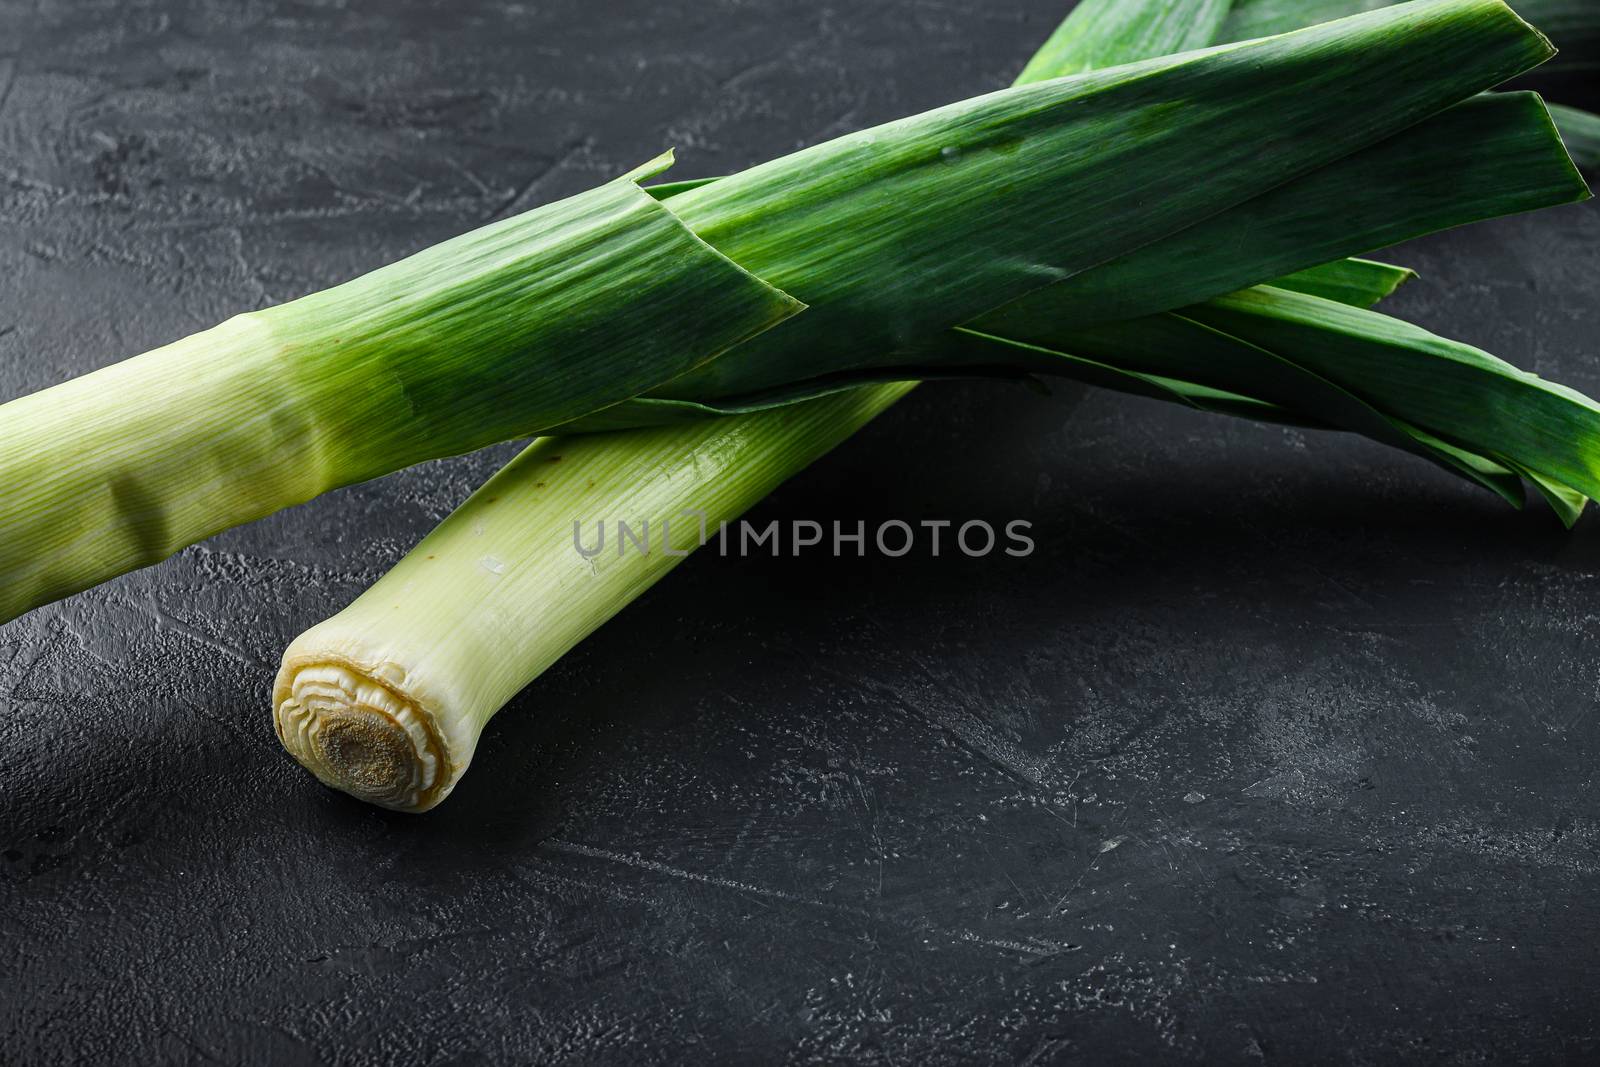 raw green Leek onion on black textured background, side view. by Ilianesolenyi